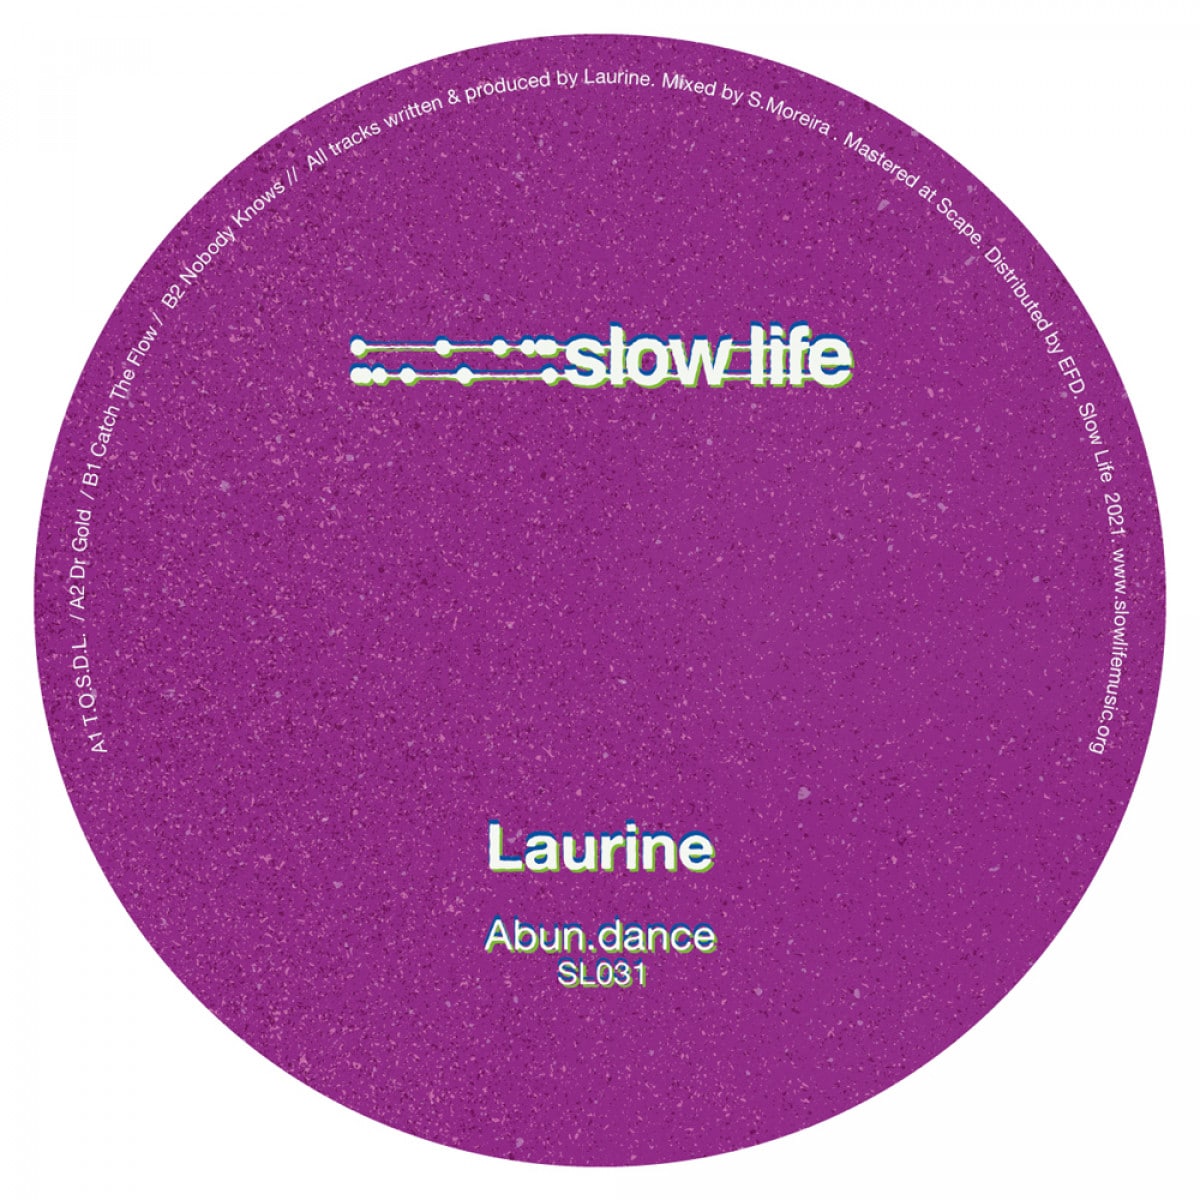 Laurine - Abun.dance - SL031 - SLOW LIFE